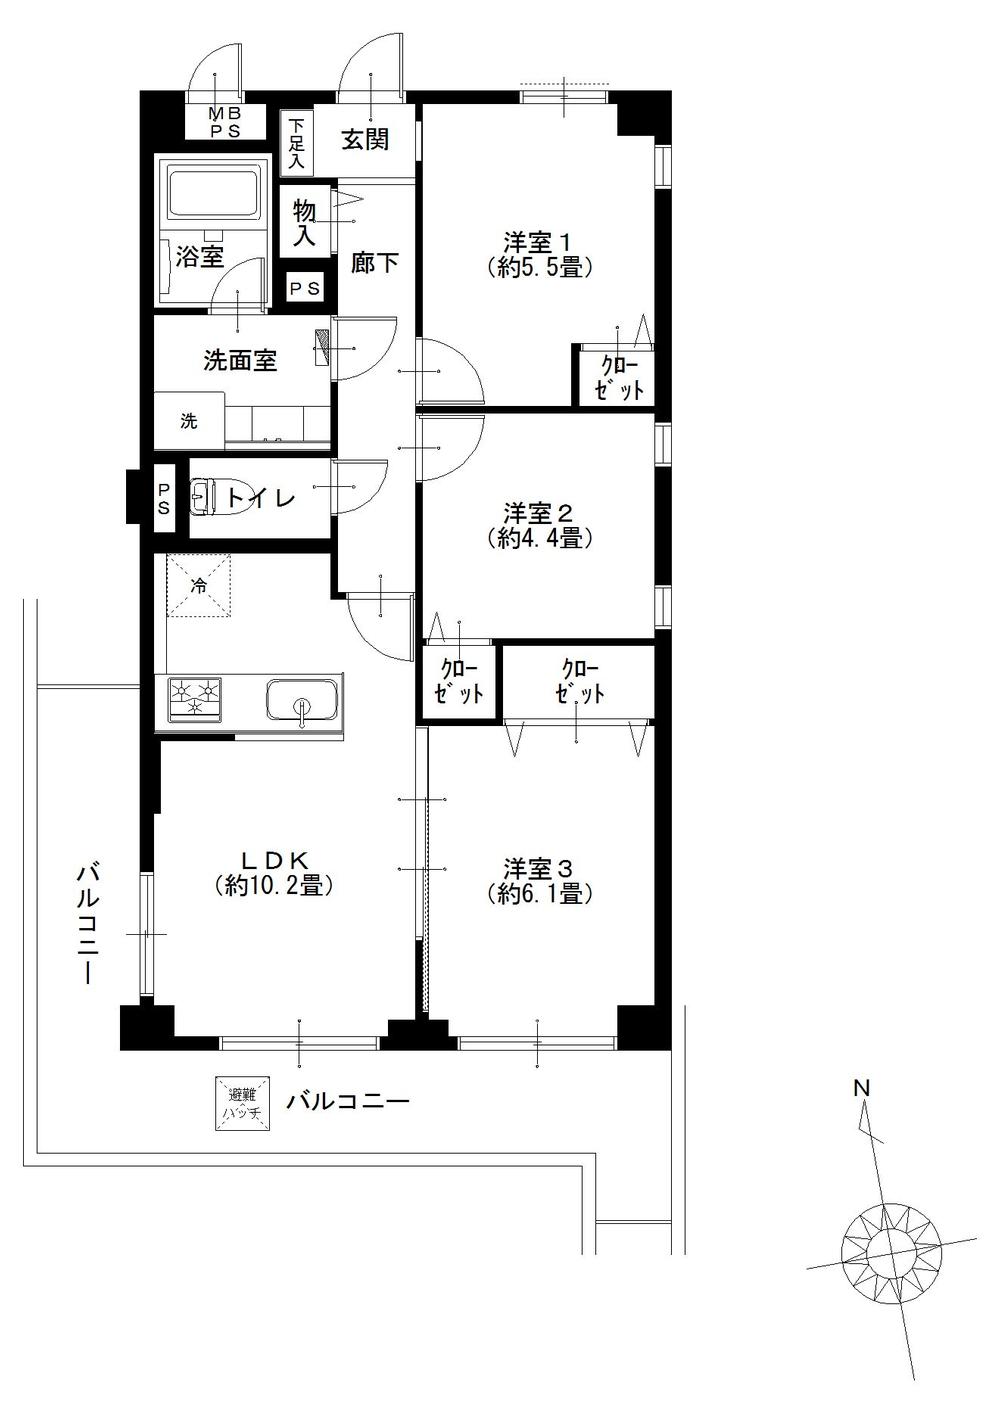 Floor plan. 3LDK, Price 18.9 million yen, Occupied area 61.48 sq m , Balcony area 15.45 sq m